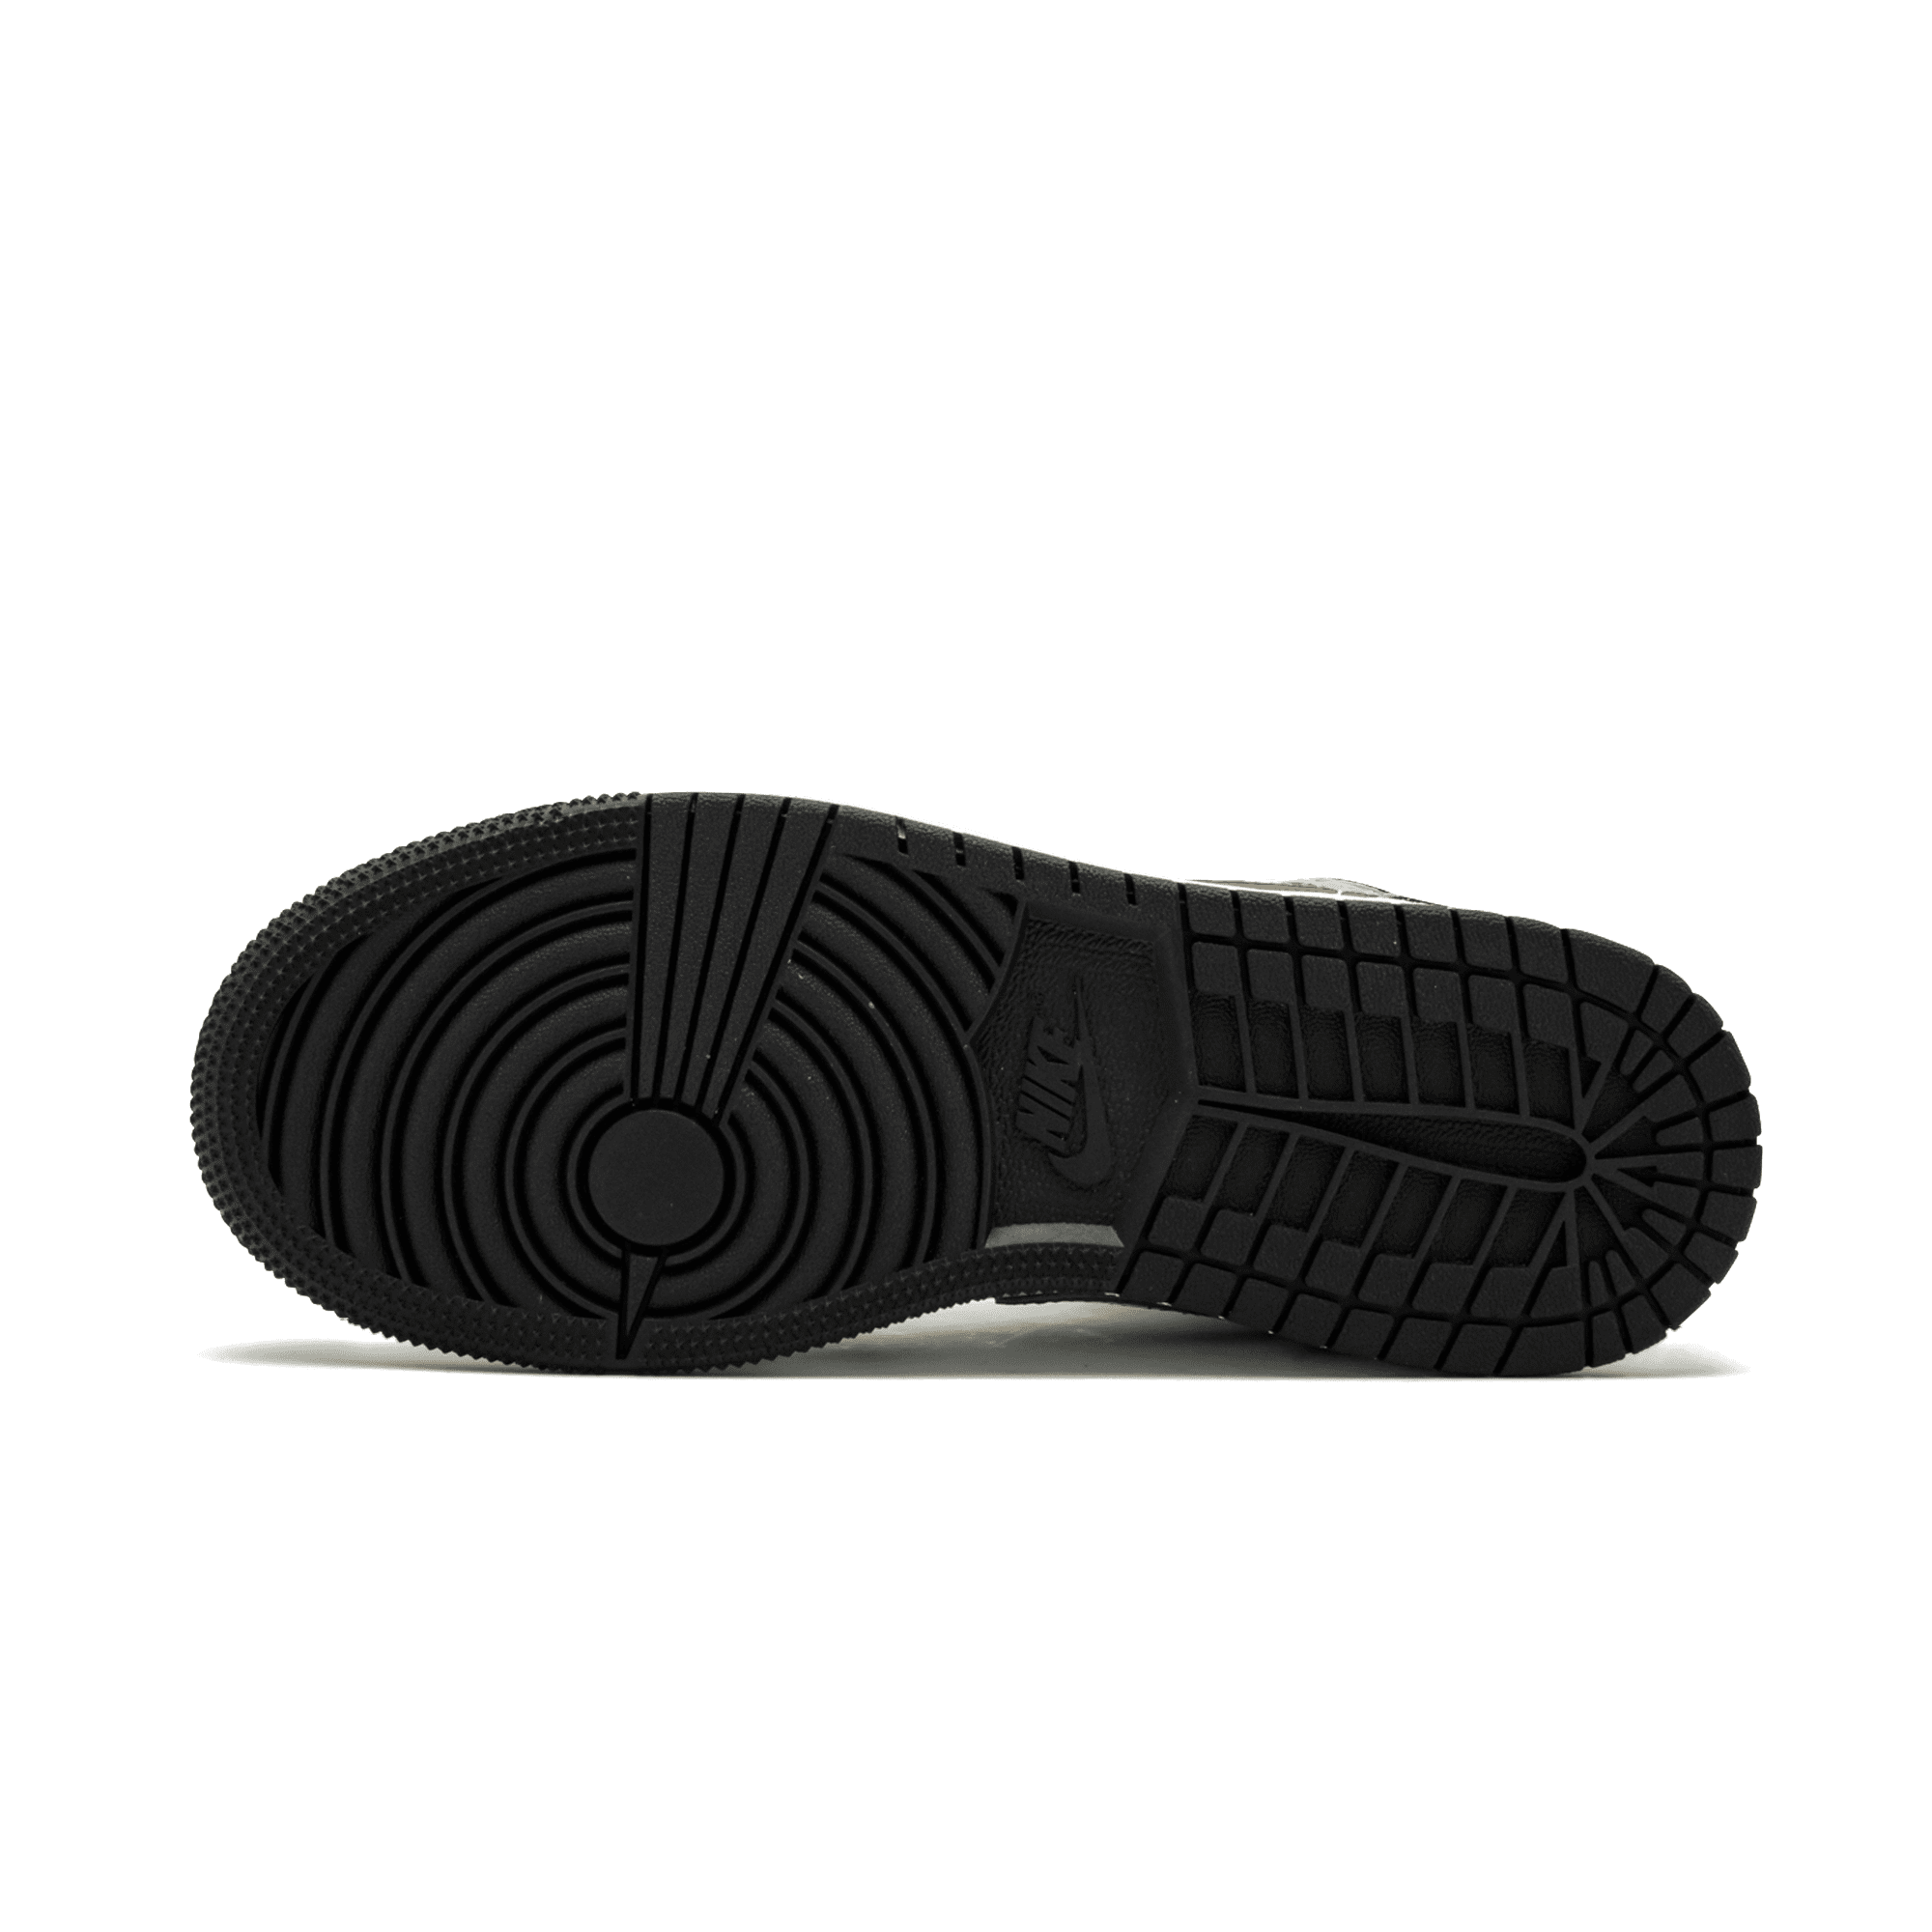 Air Jordan 1 Retro Mid “Black Gold Patent Leather” - Manore Store